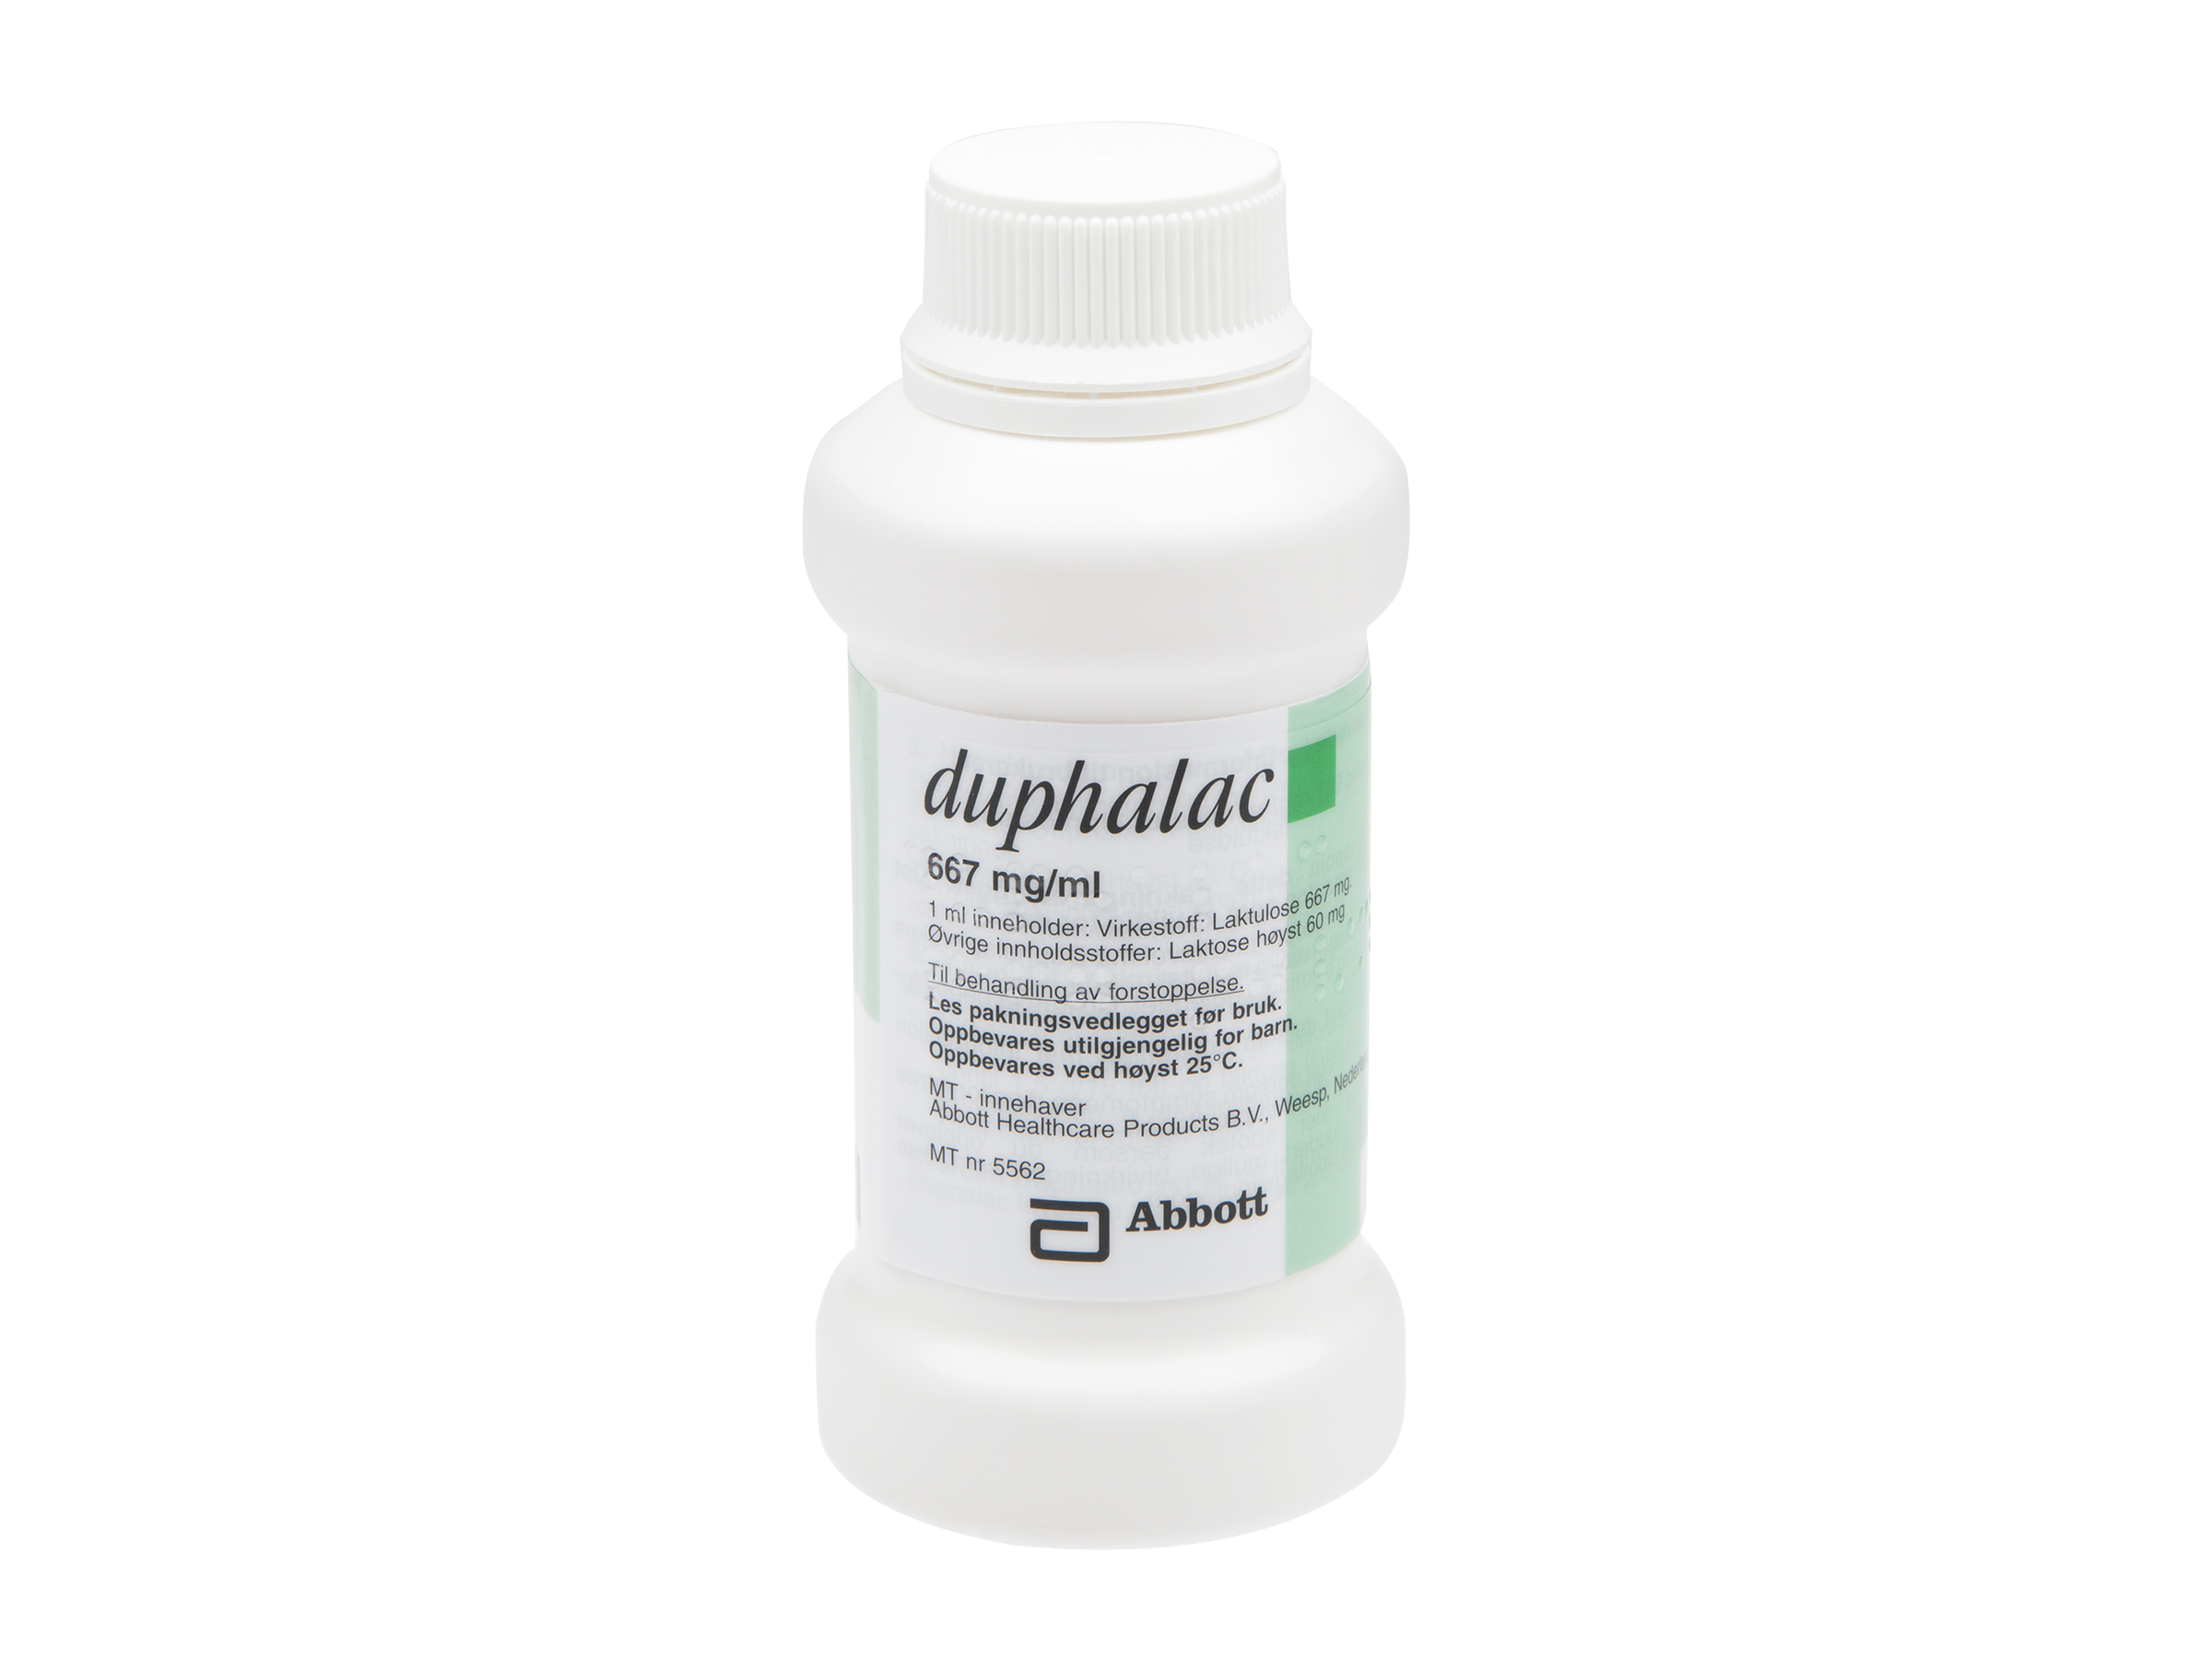 Duphalac Mikstur 667mg/ml, 200 ml